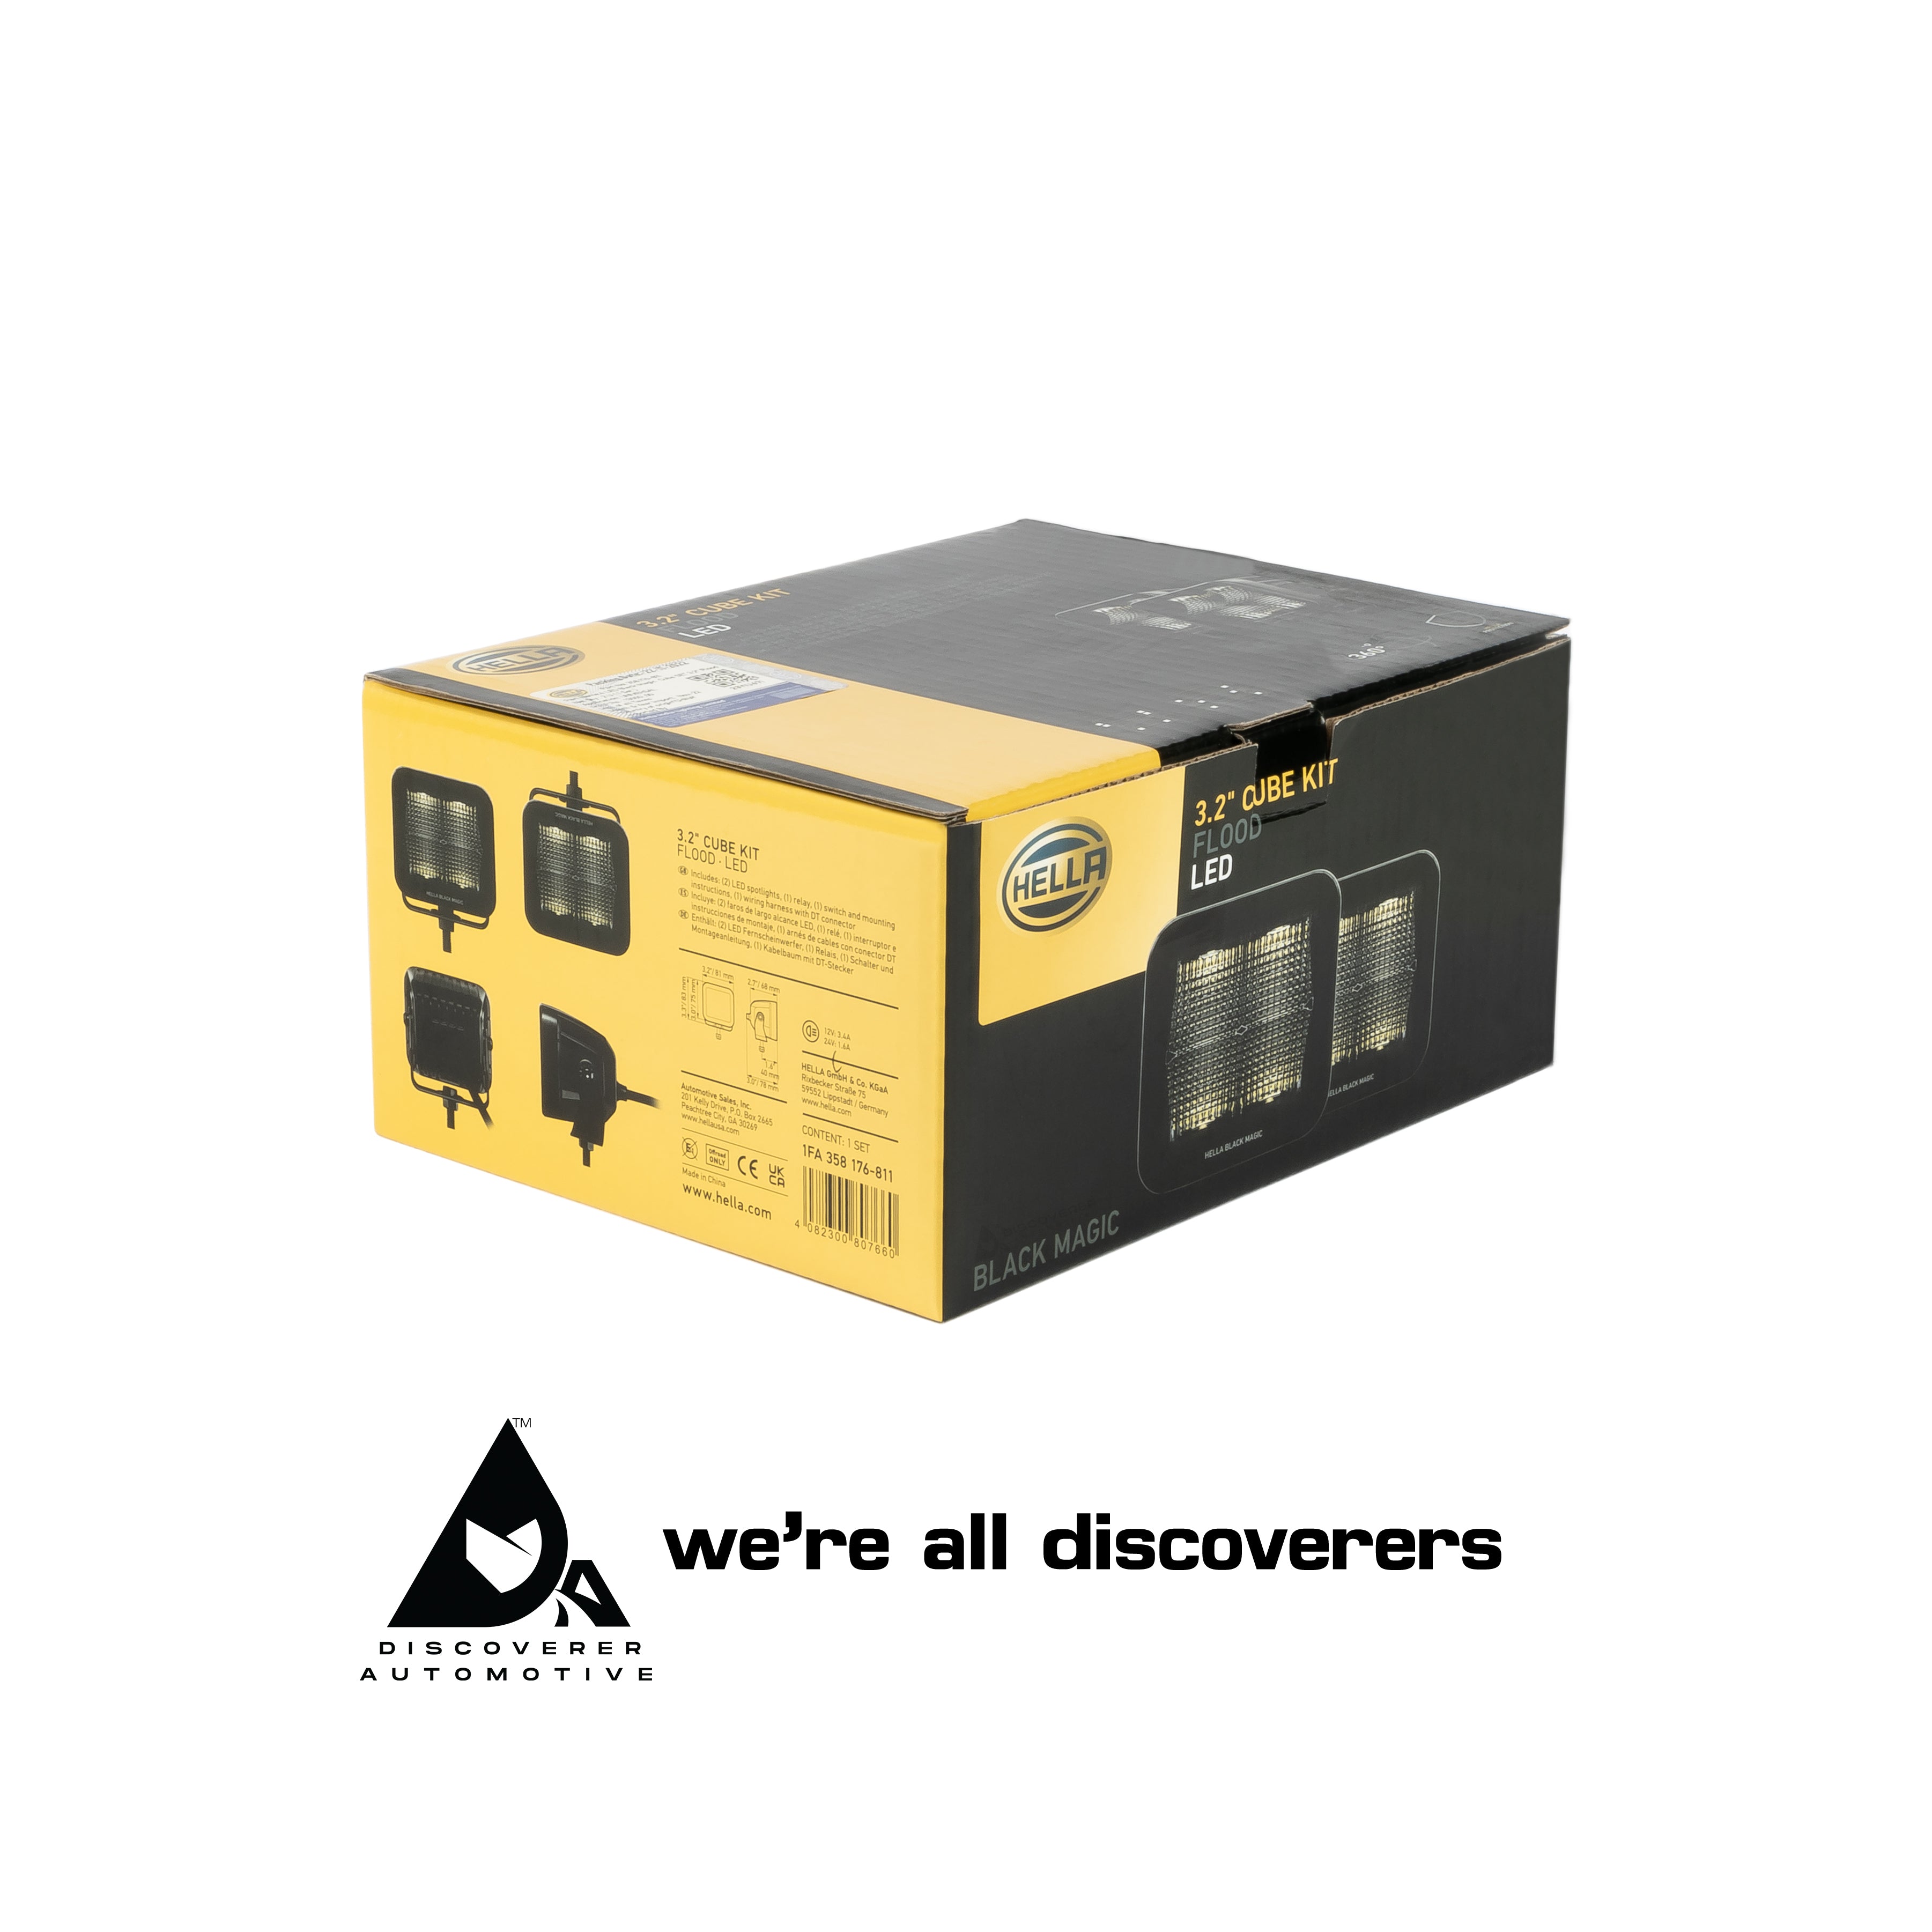 Hella Black Magic - 3.2” Cube Kit Flood LED Overview 